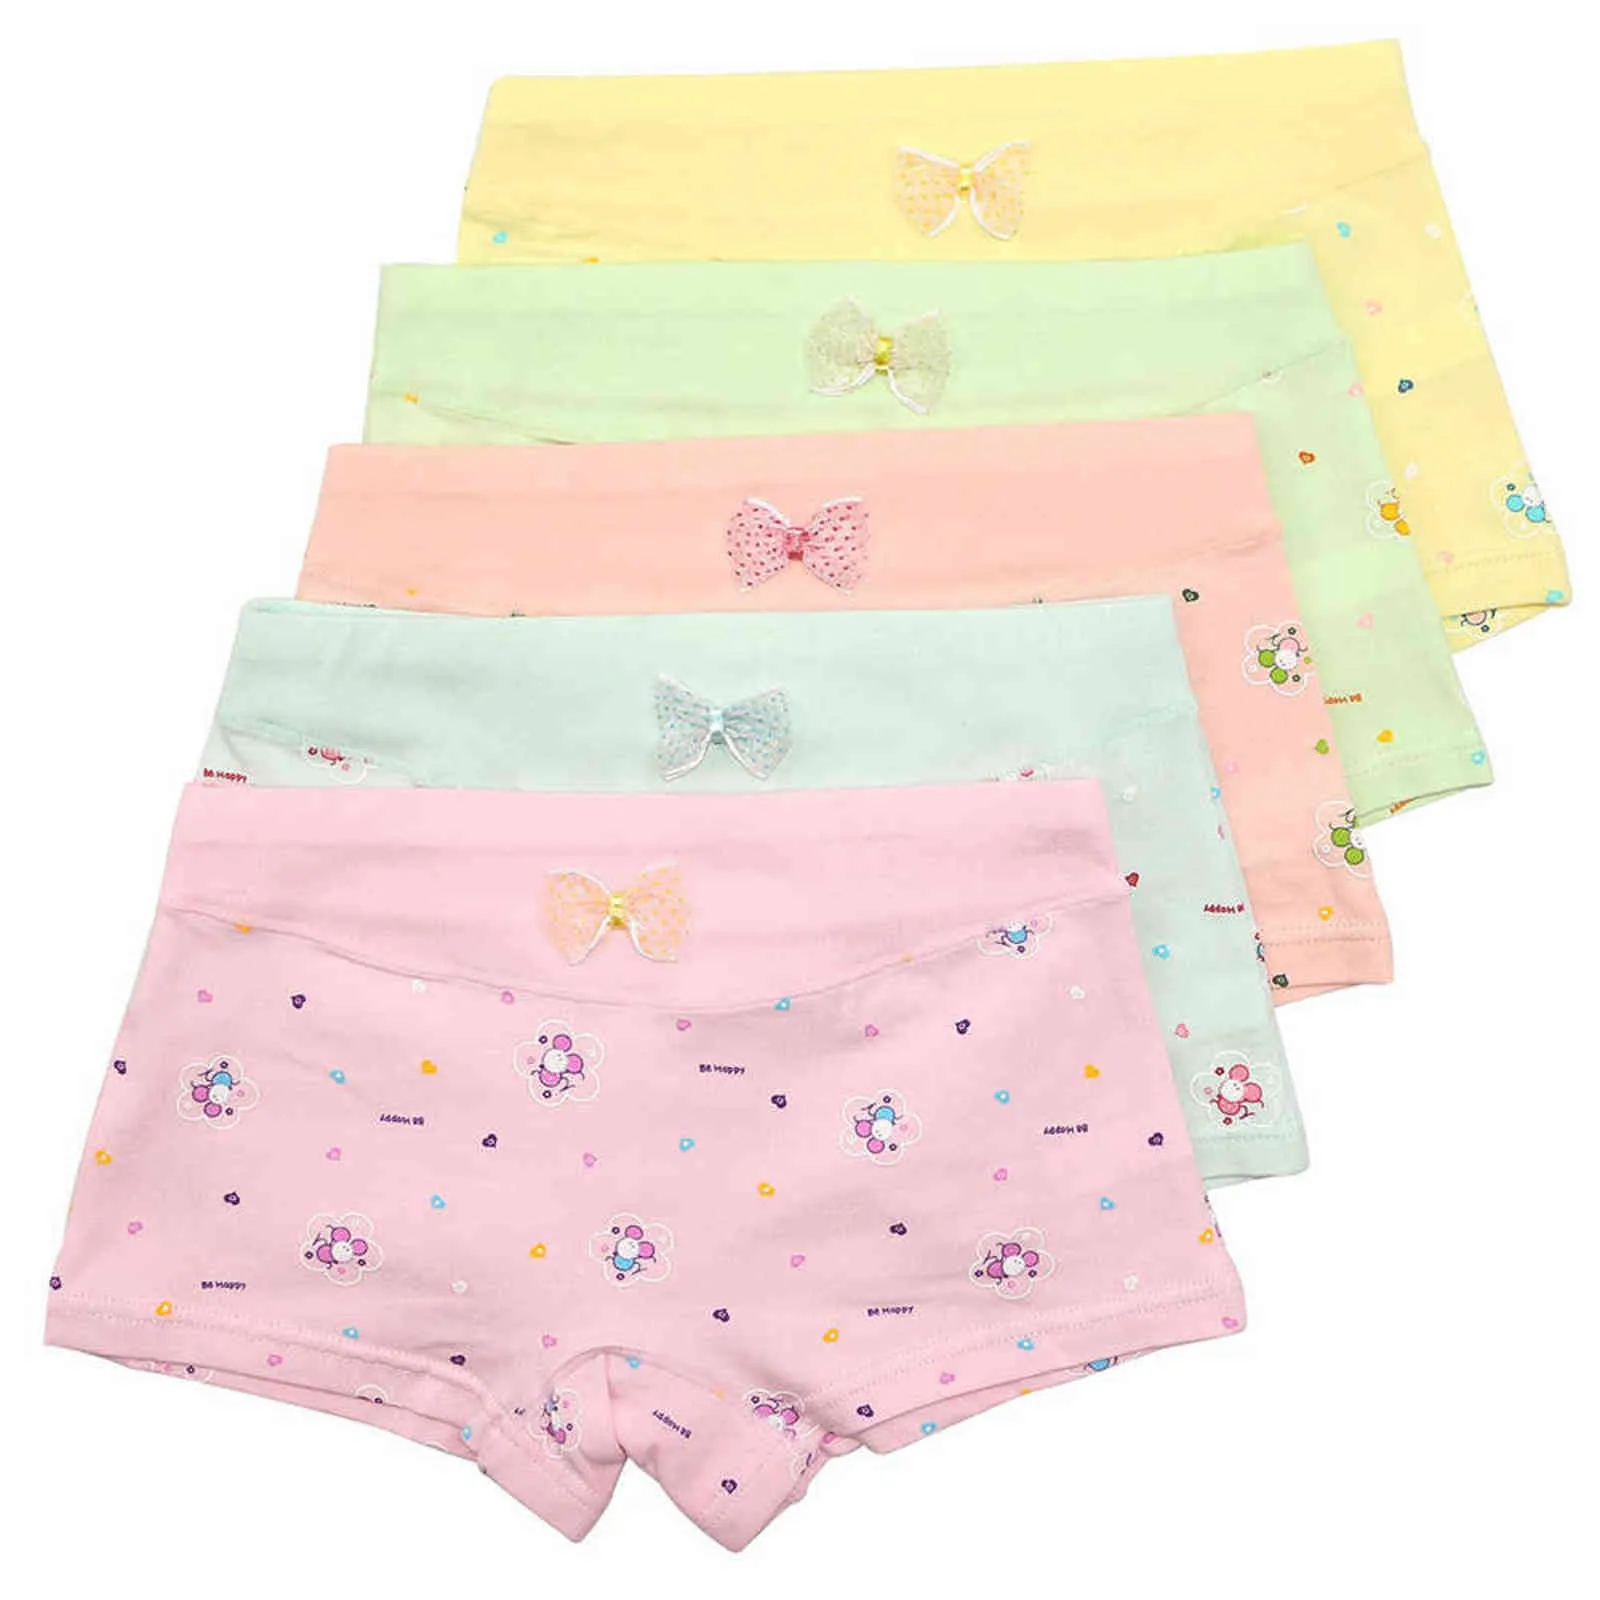 5 Pack Girls Boxer Briefs Set Cotton Organic Cotton Panties For